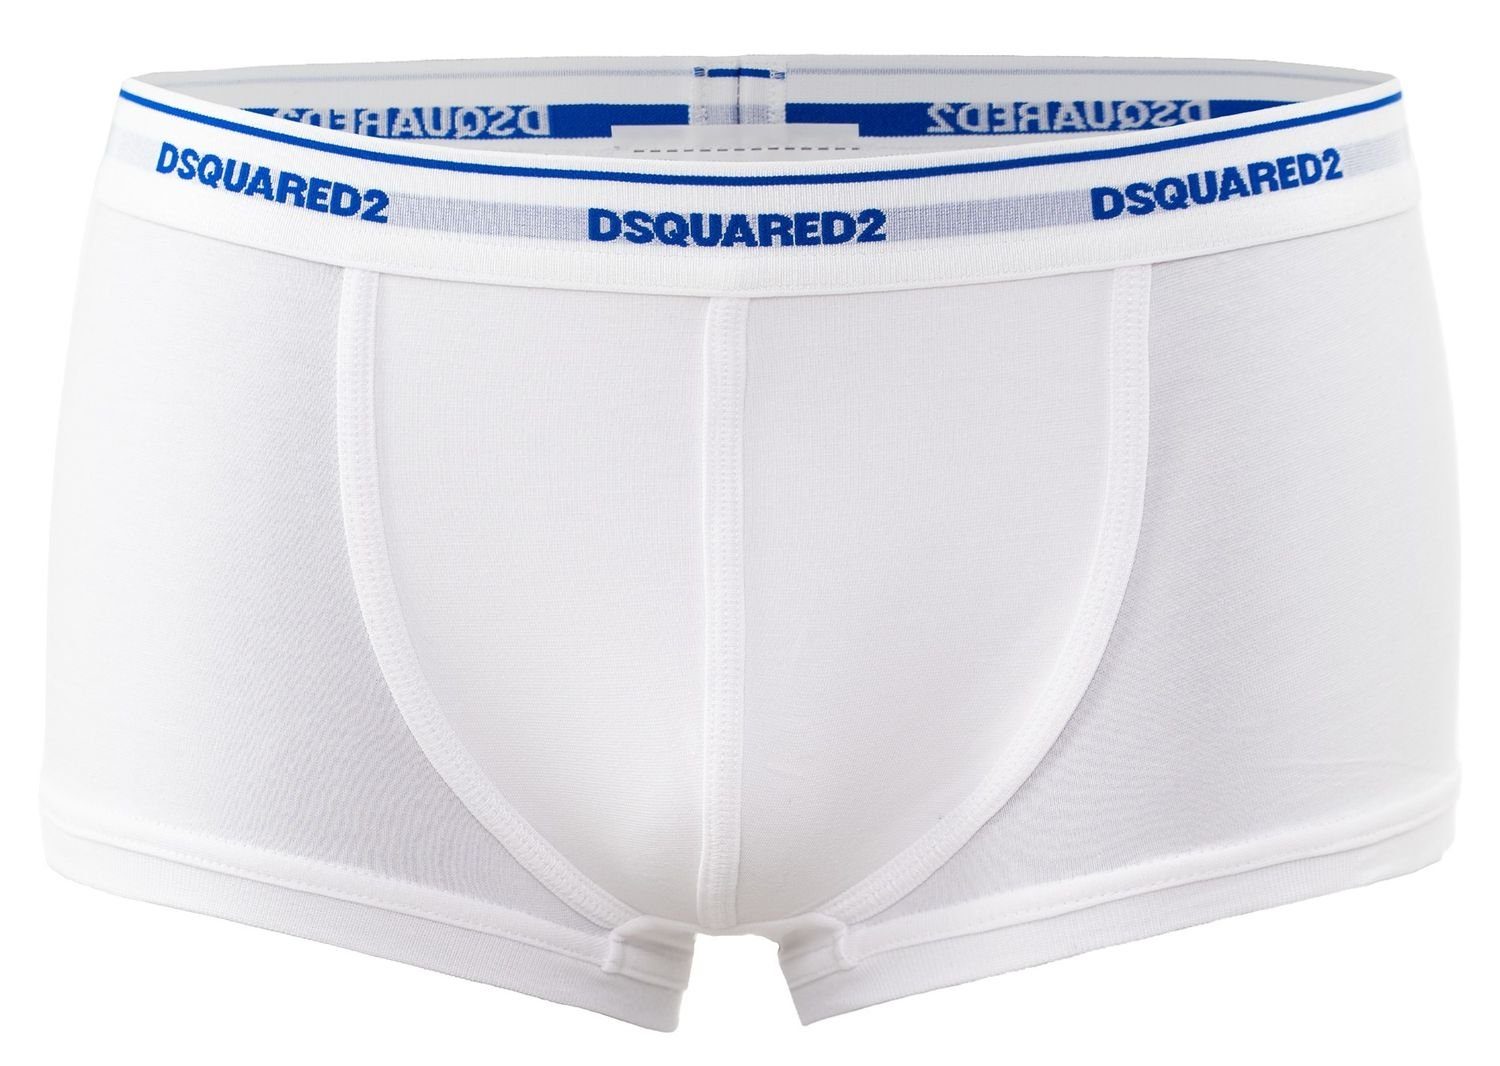 Dsquared2 Trunk Dsquared2 Boxershorts / Pants / Shorts / Boxer in weiß Größe M / L / XL / XXL (1-St)